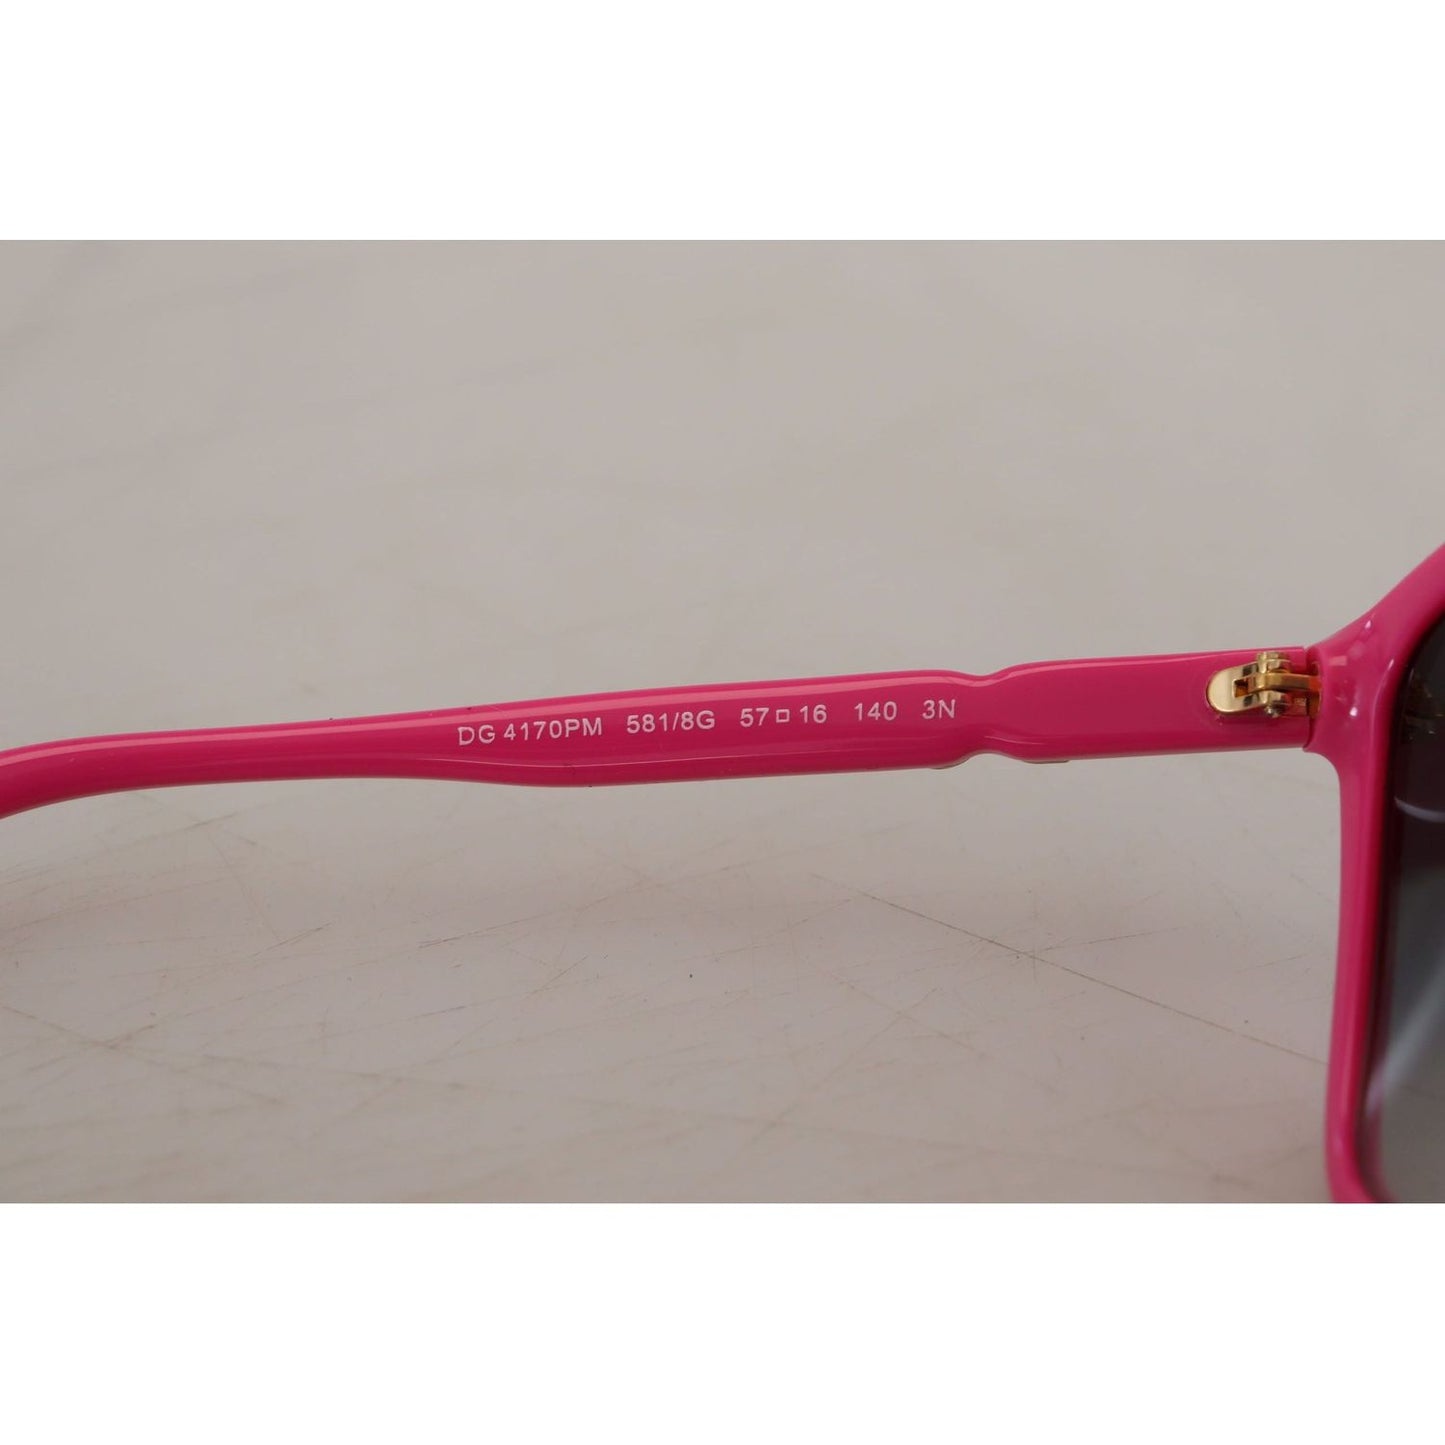 Dolce & Gabbana Elegant Pink Round Sunglasses for Women pink-acetate-frame-round-shades-dg4170m-women-sunglasses IMG_4610-scaled-59c90ef9-bfb.jpg